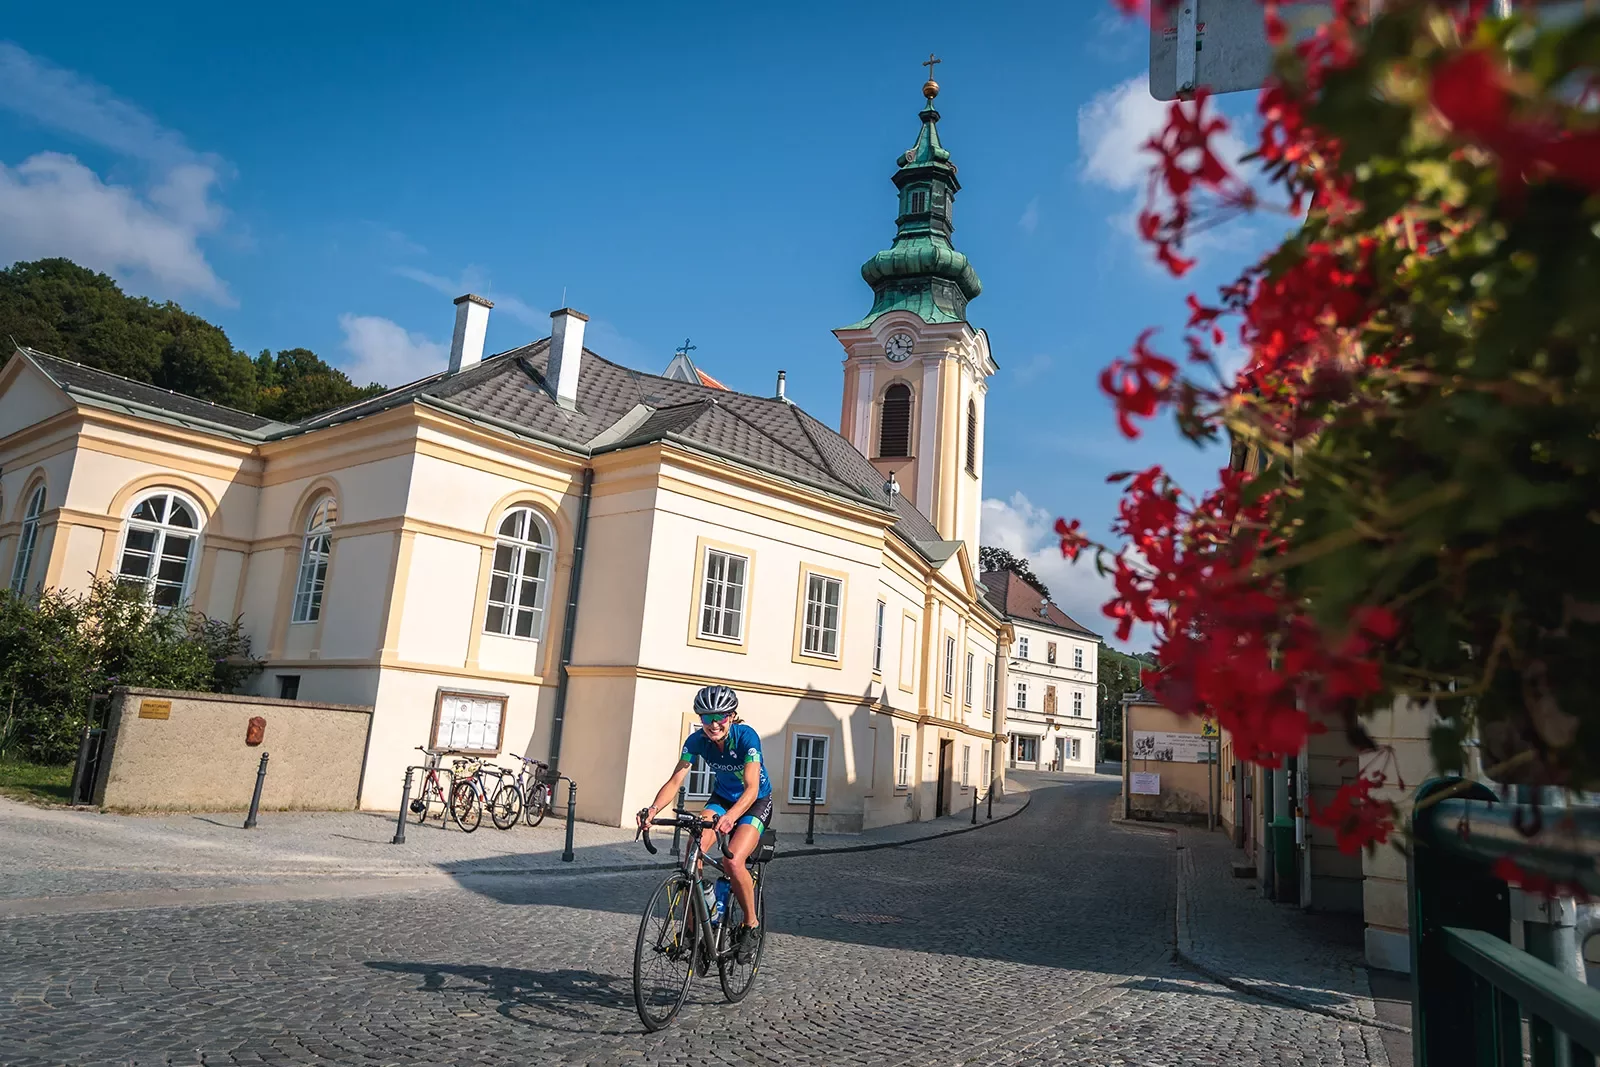 Biker riding past clock tower on cobblestones in Europe.